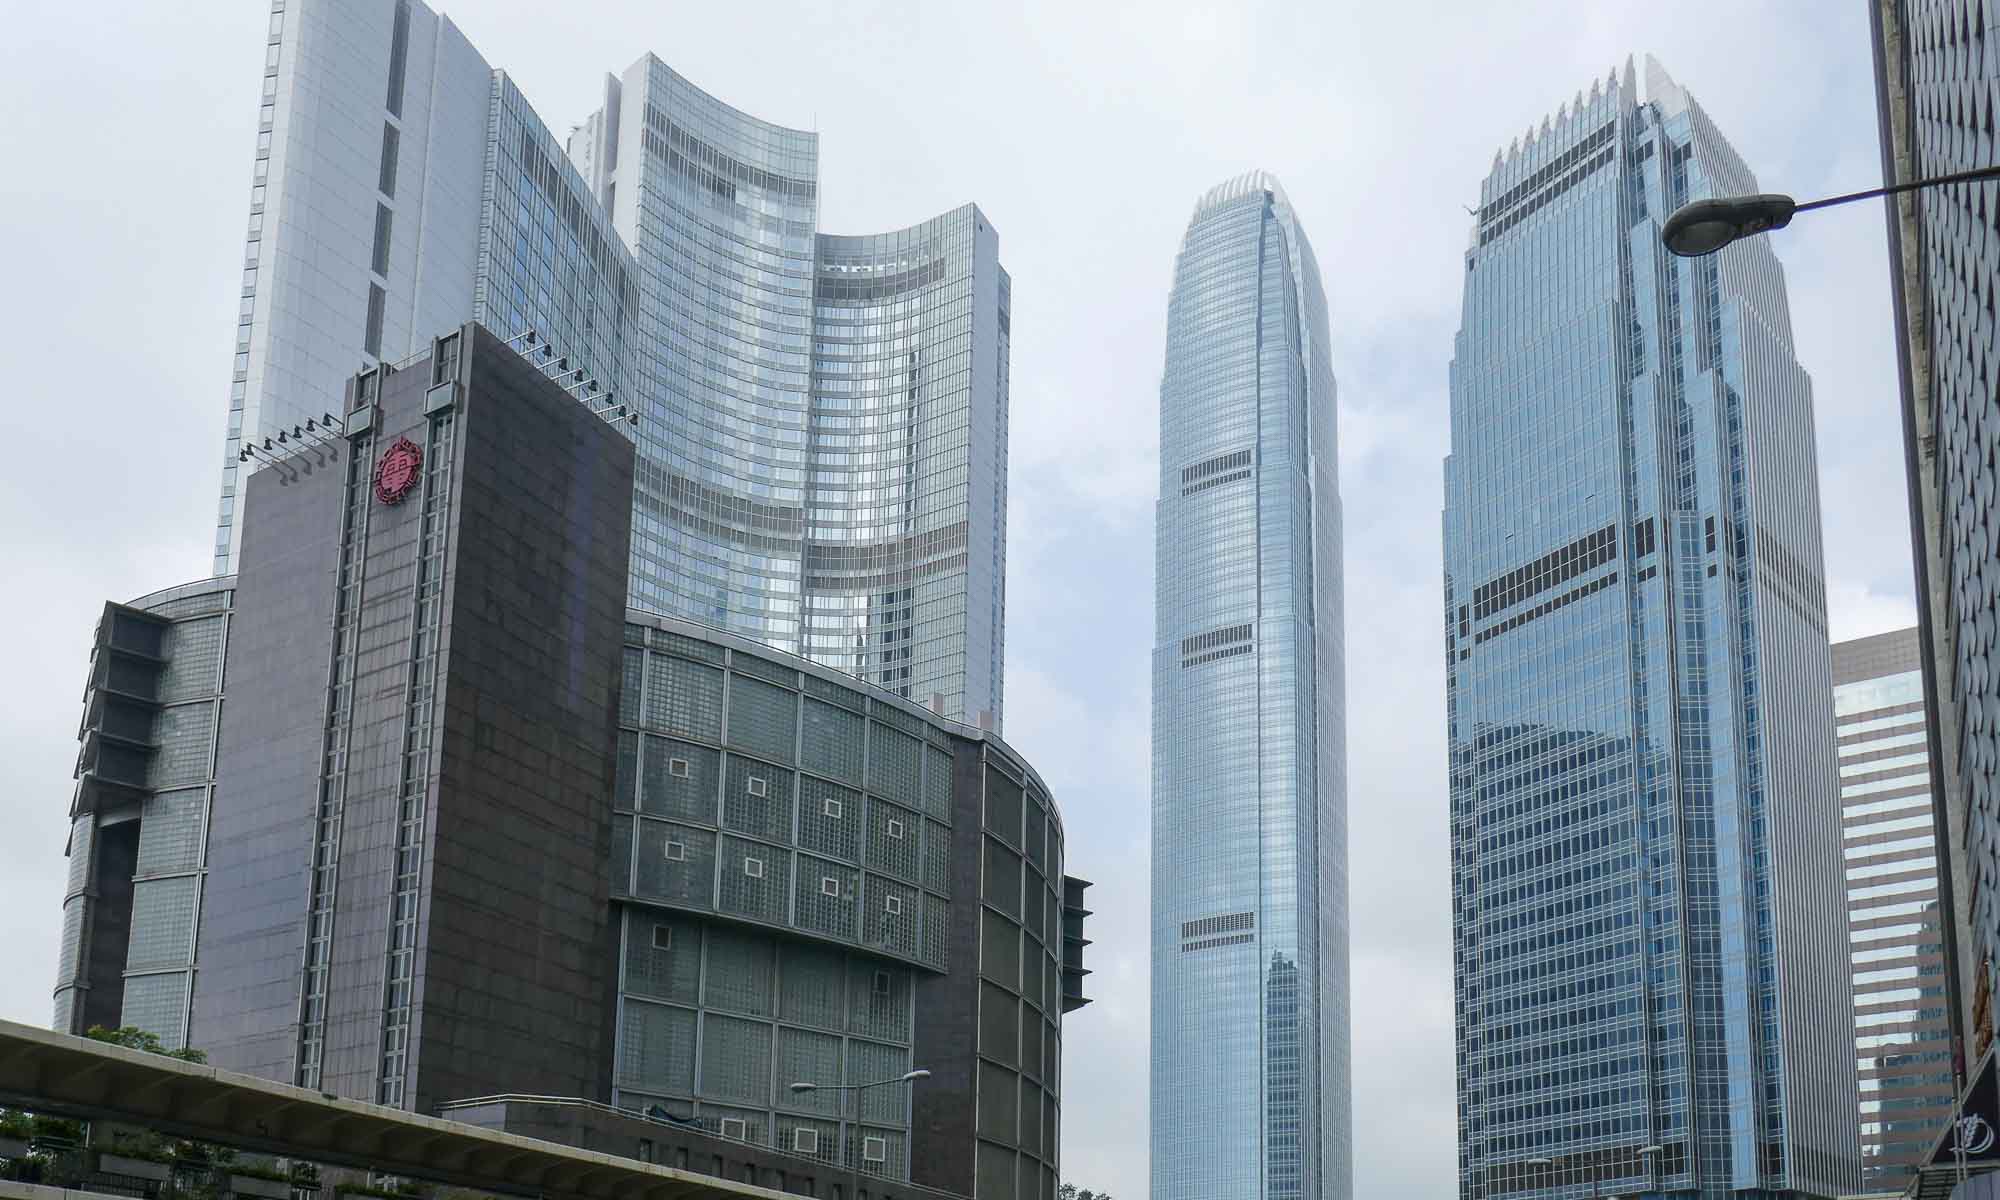 Hong Kong Island skyscrapers